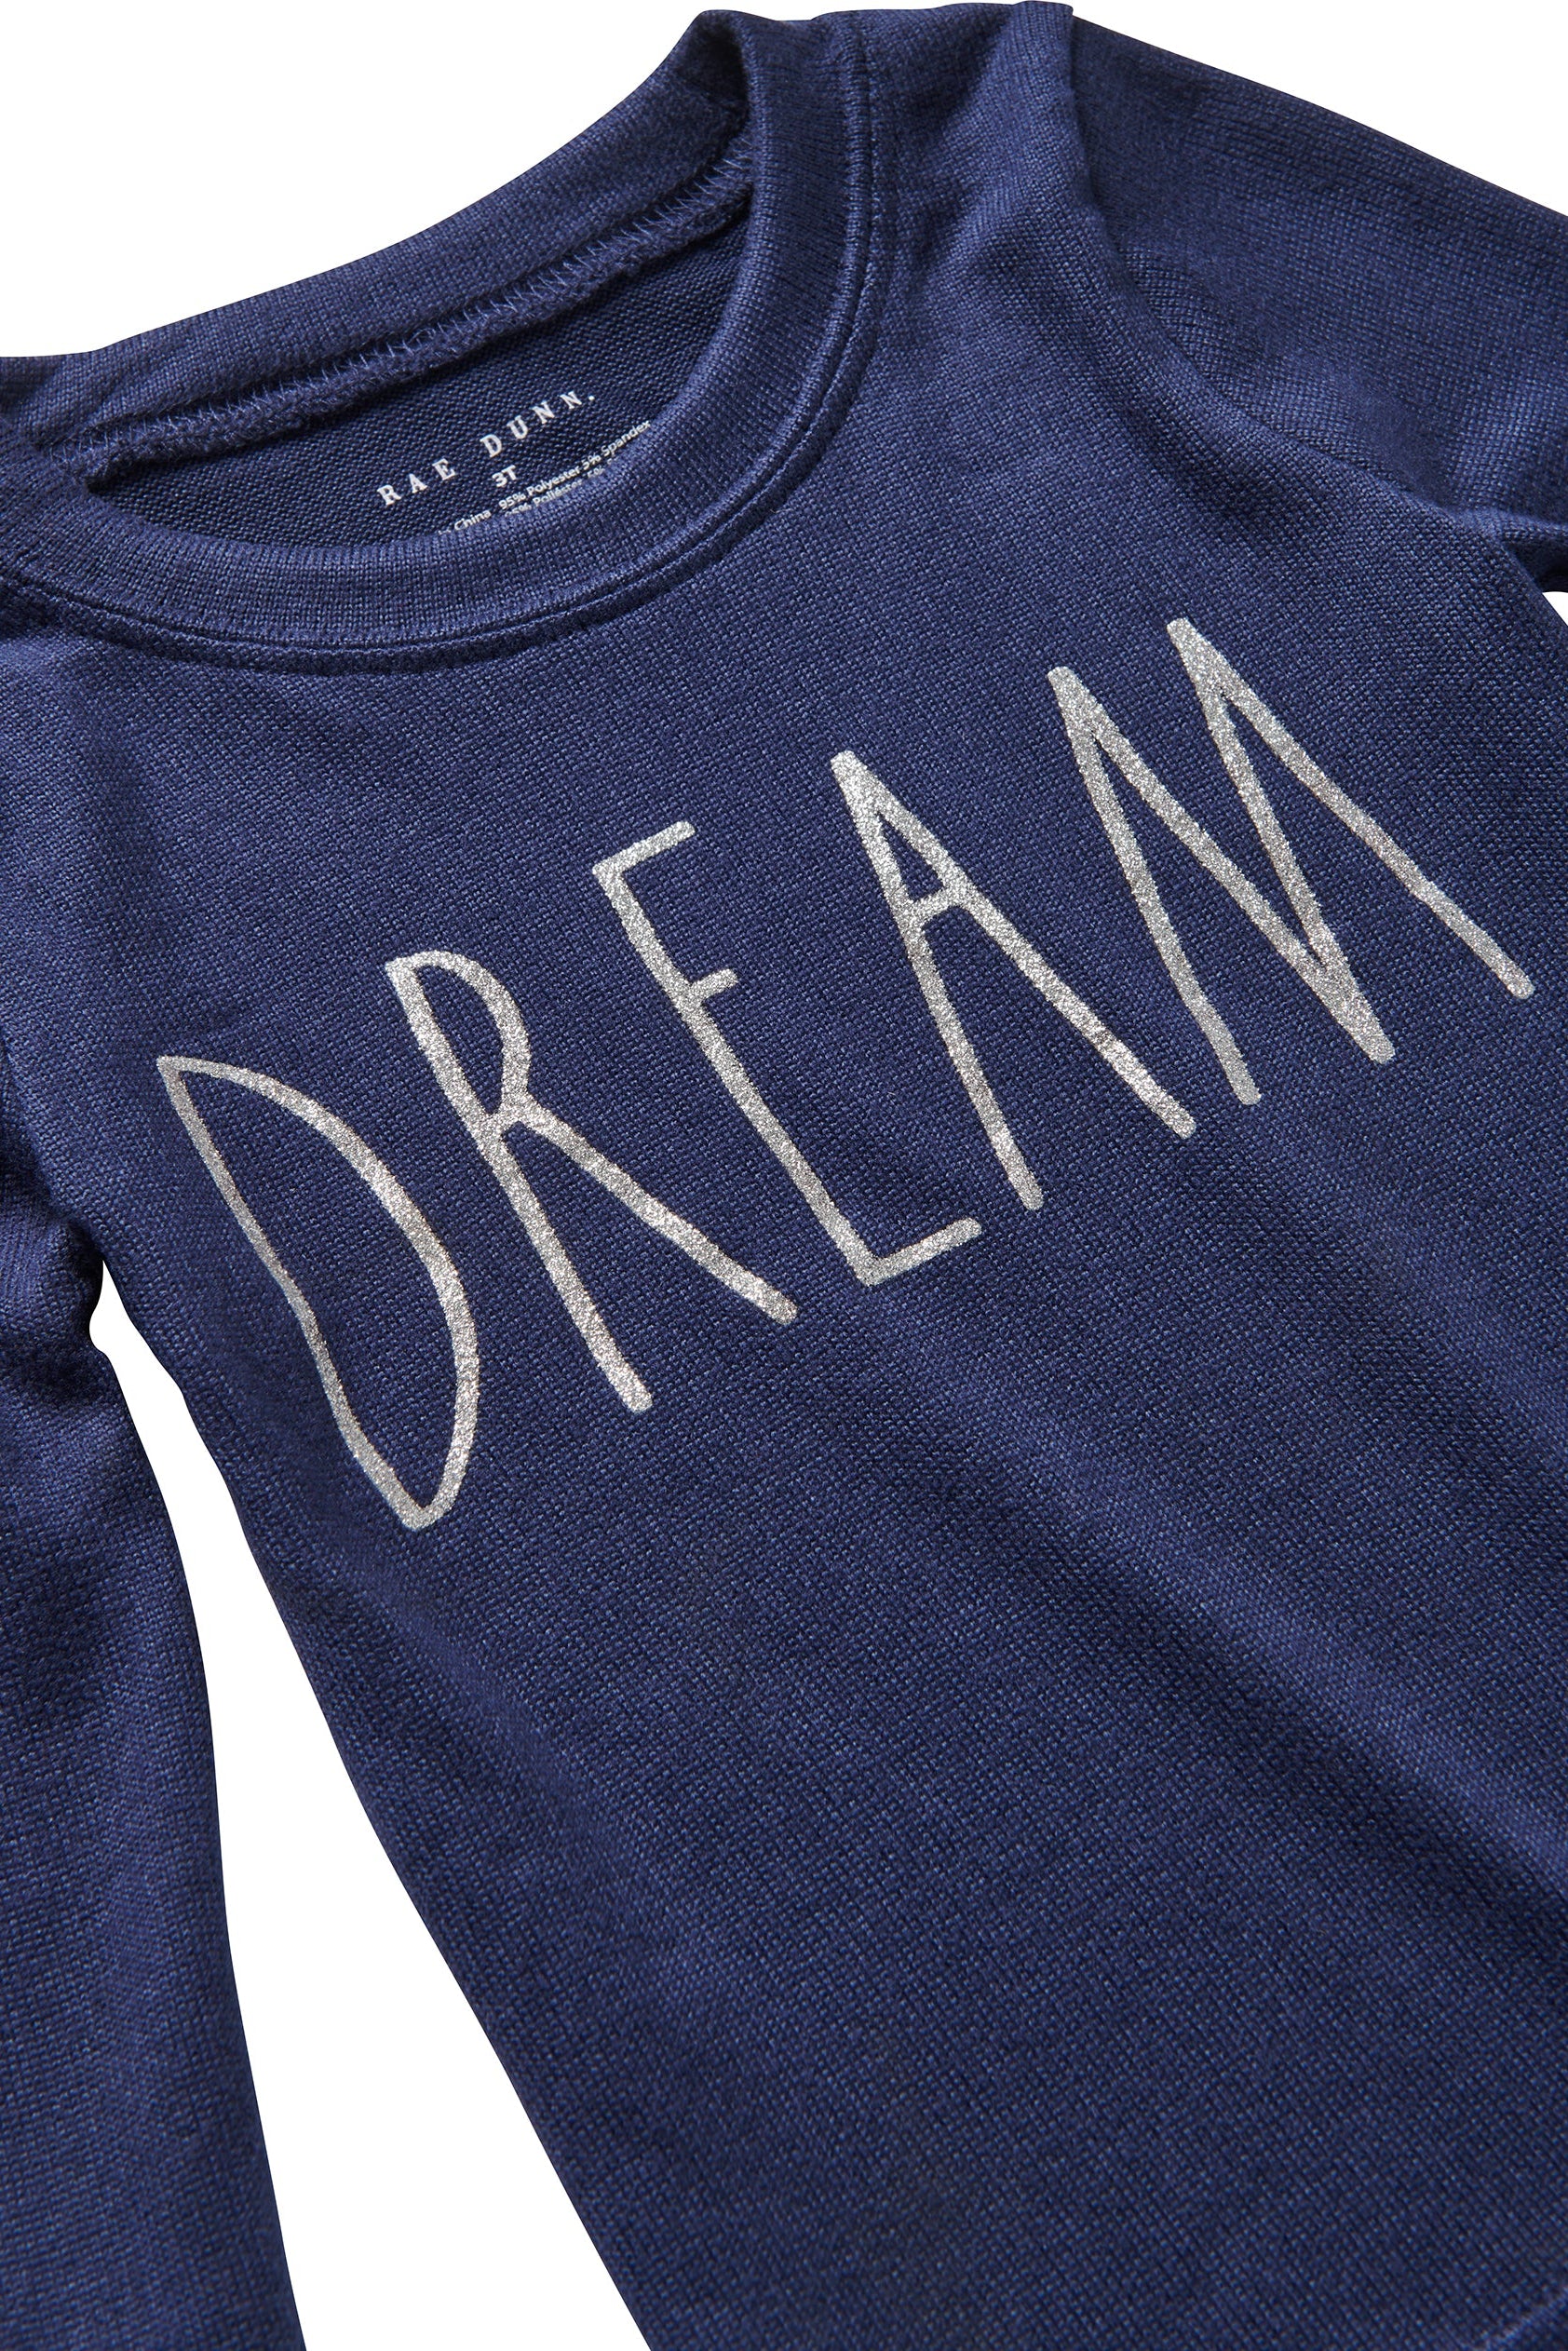 Girls' "DREAM" Long Sleeve Top and Joggers Pajama Set - Rae Dunn Wear